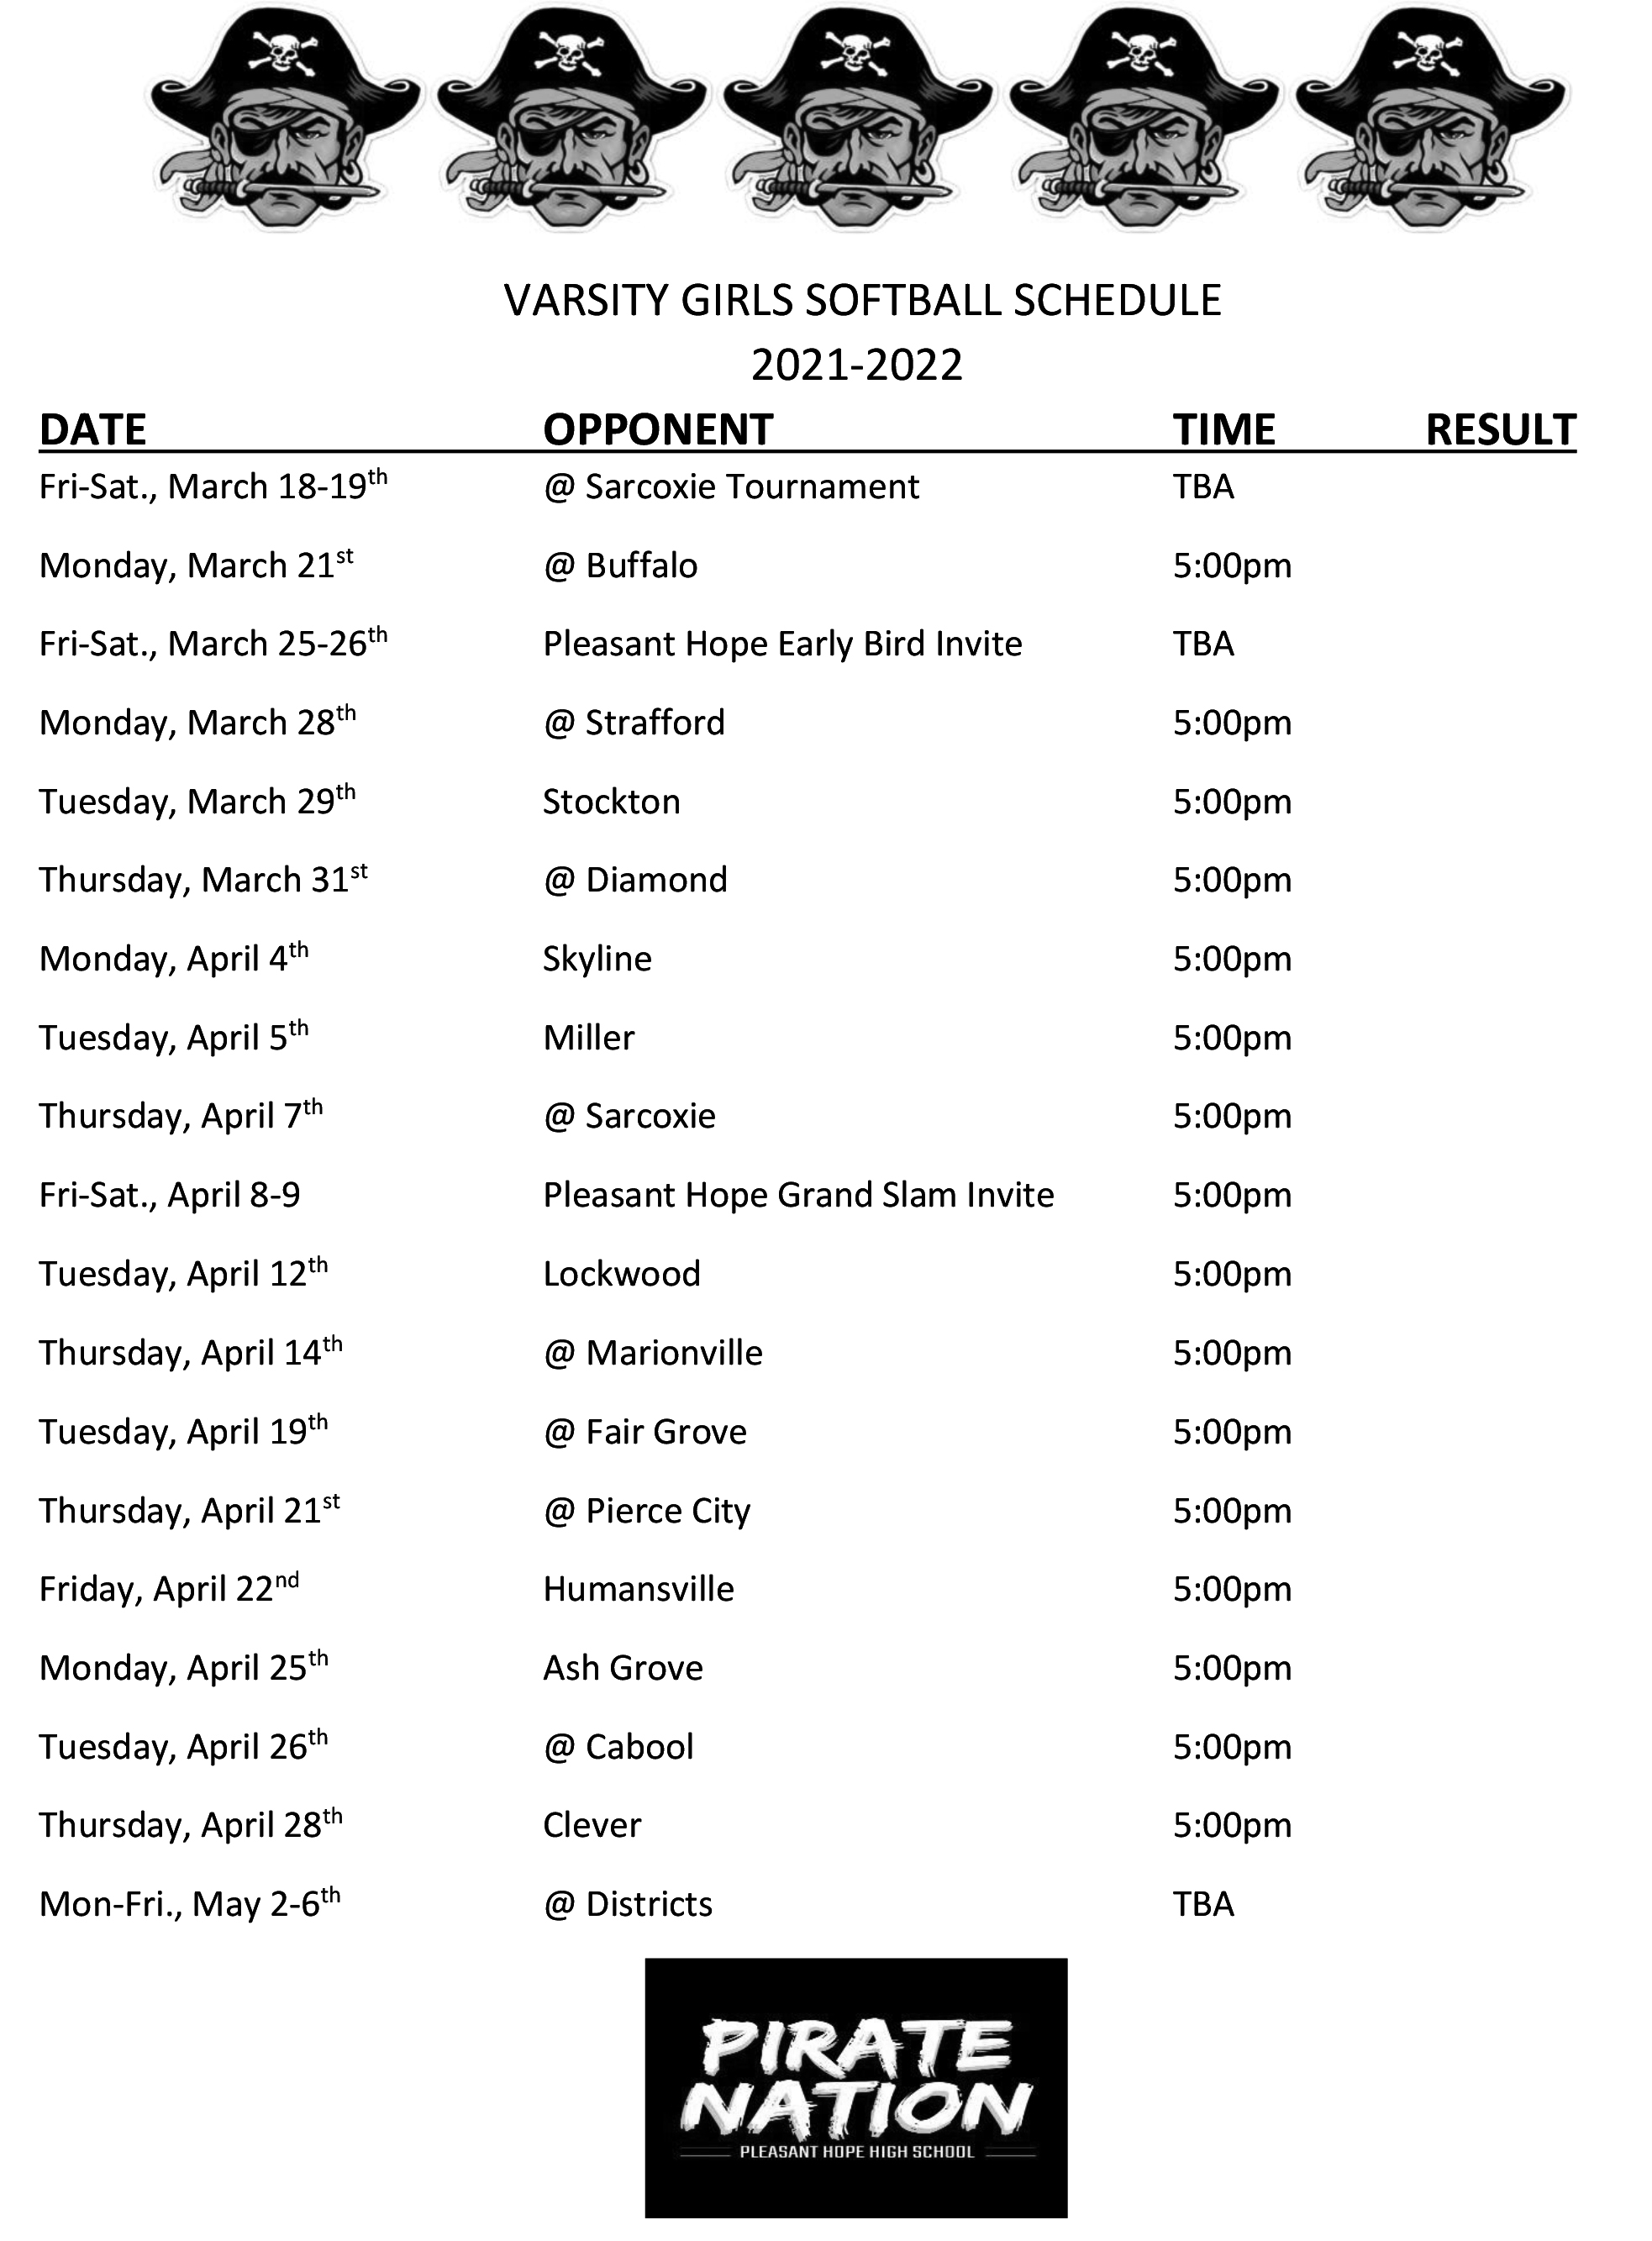 HS Softball Schedule